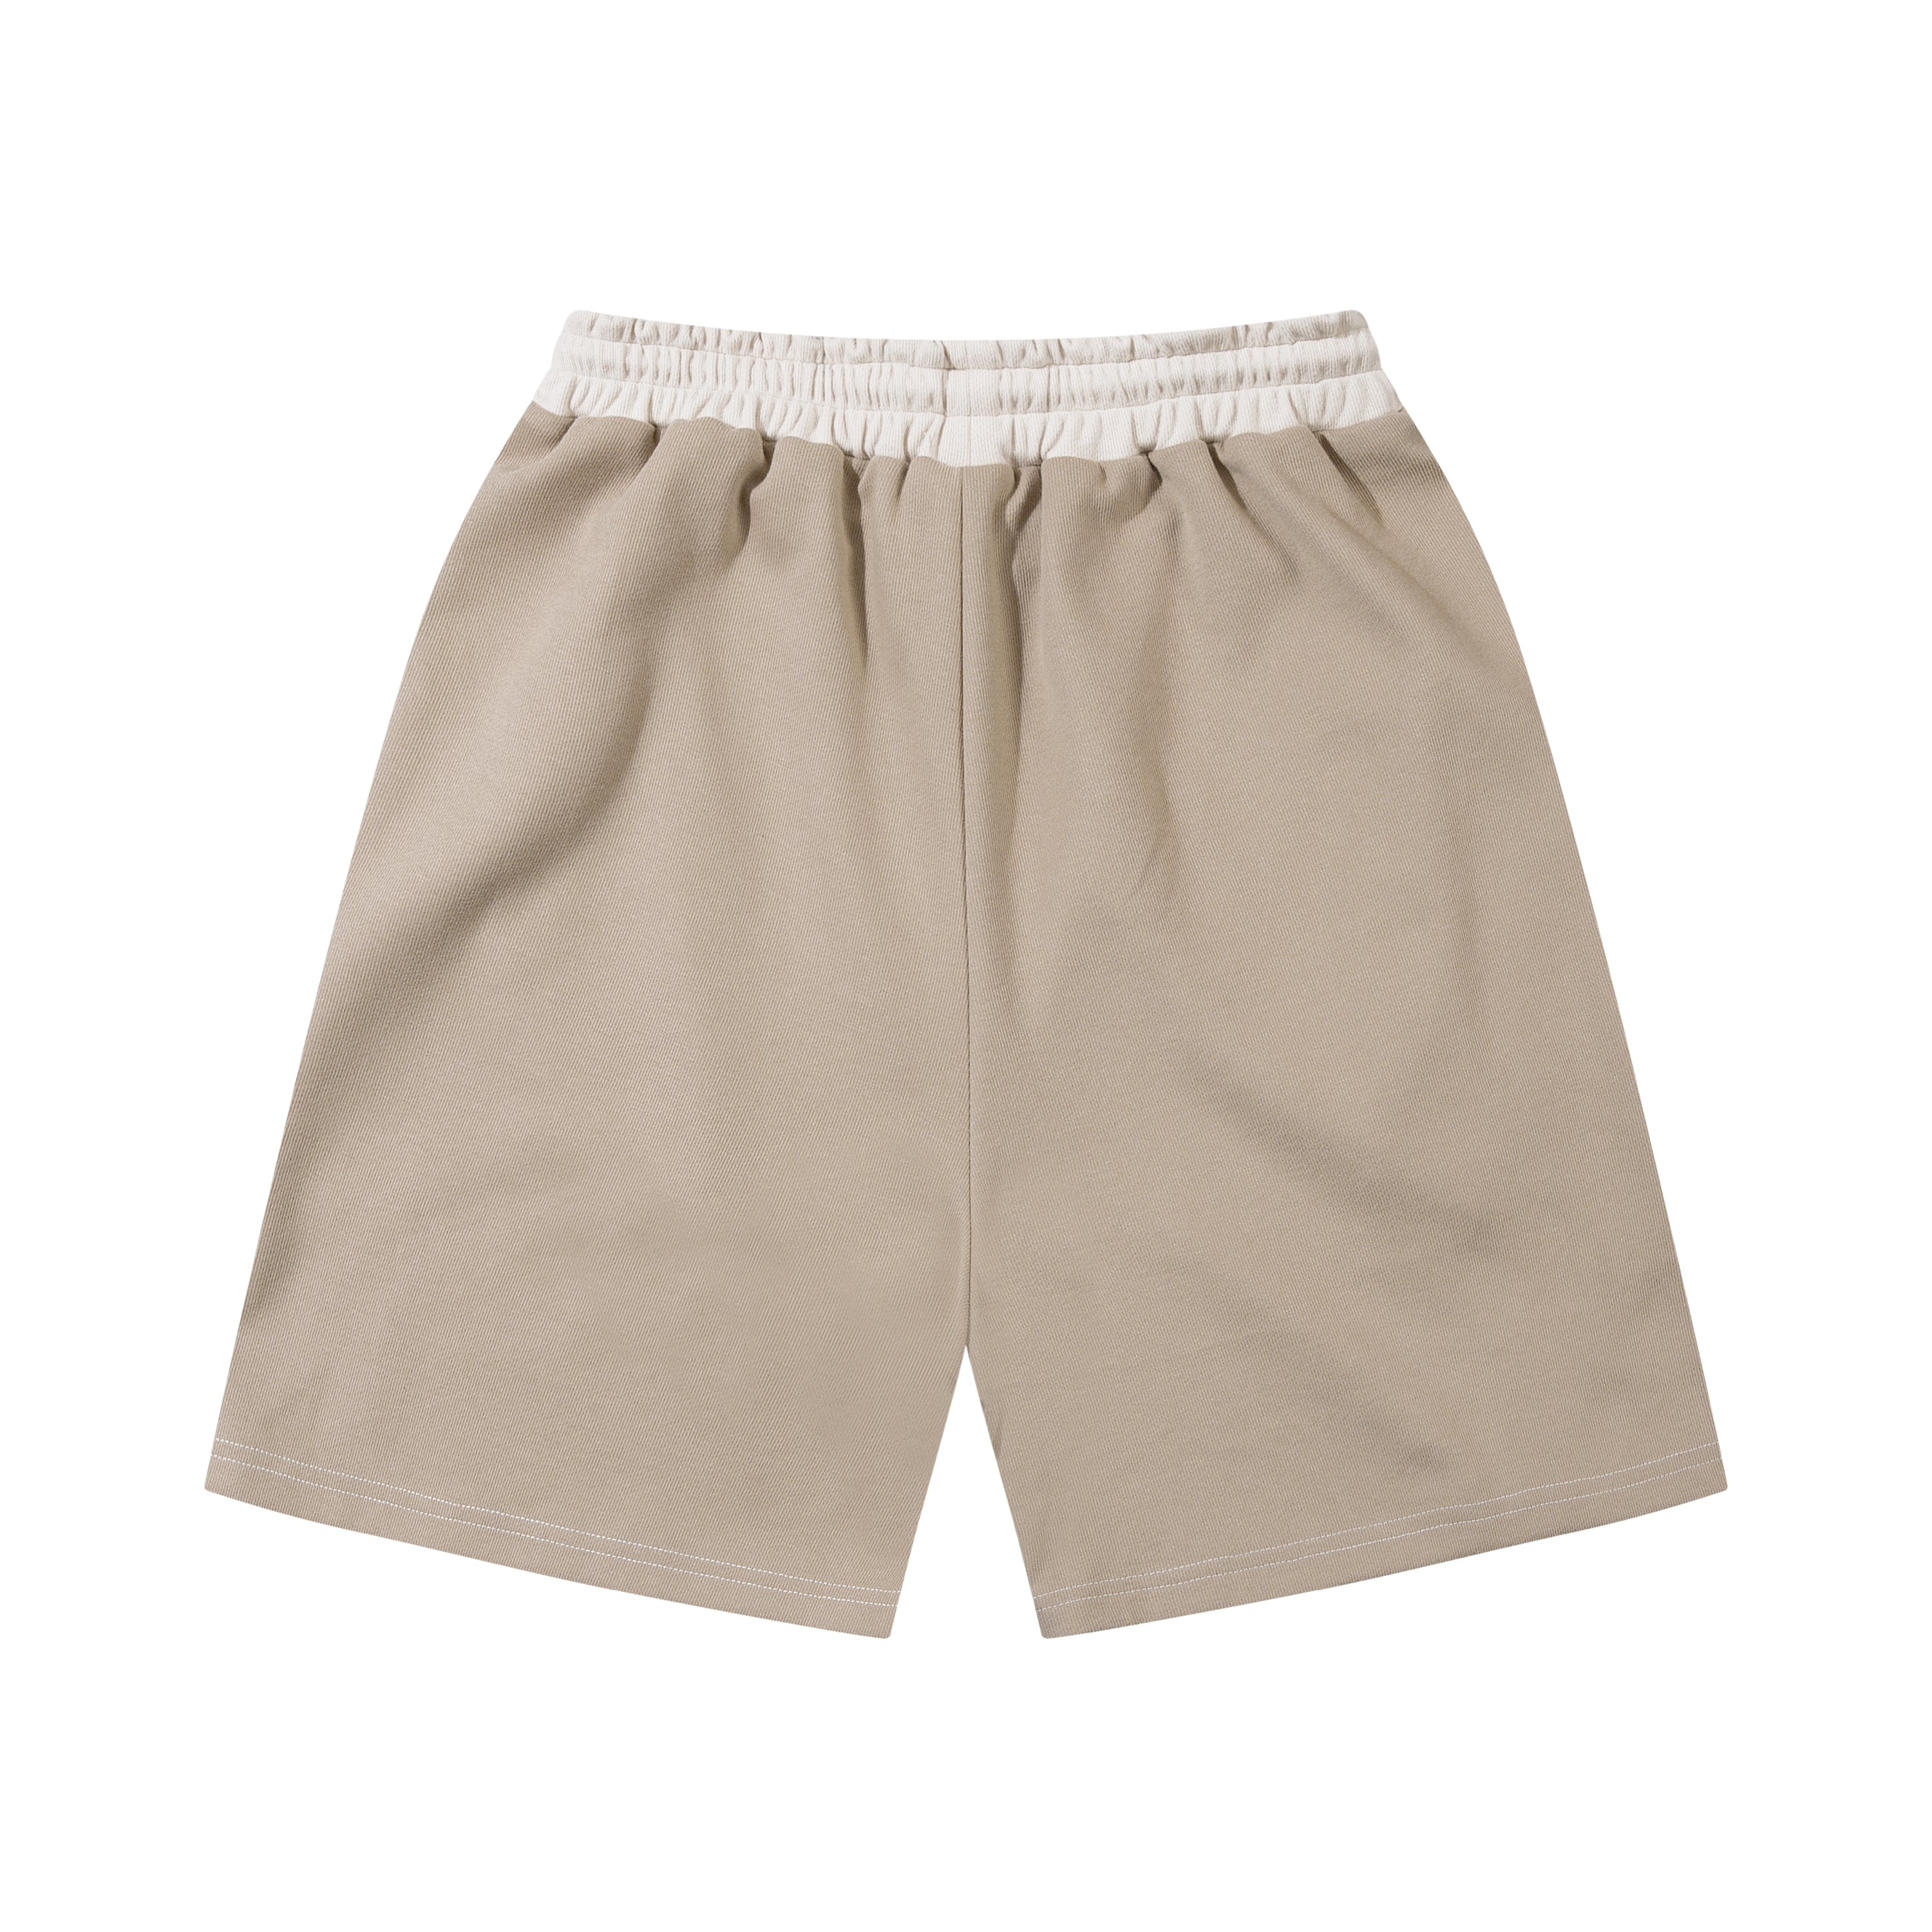 "Urban Explorer" Ivory Shorts - Santo 